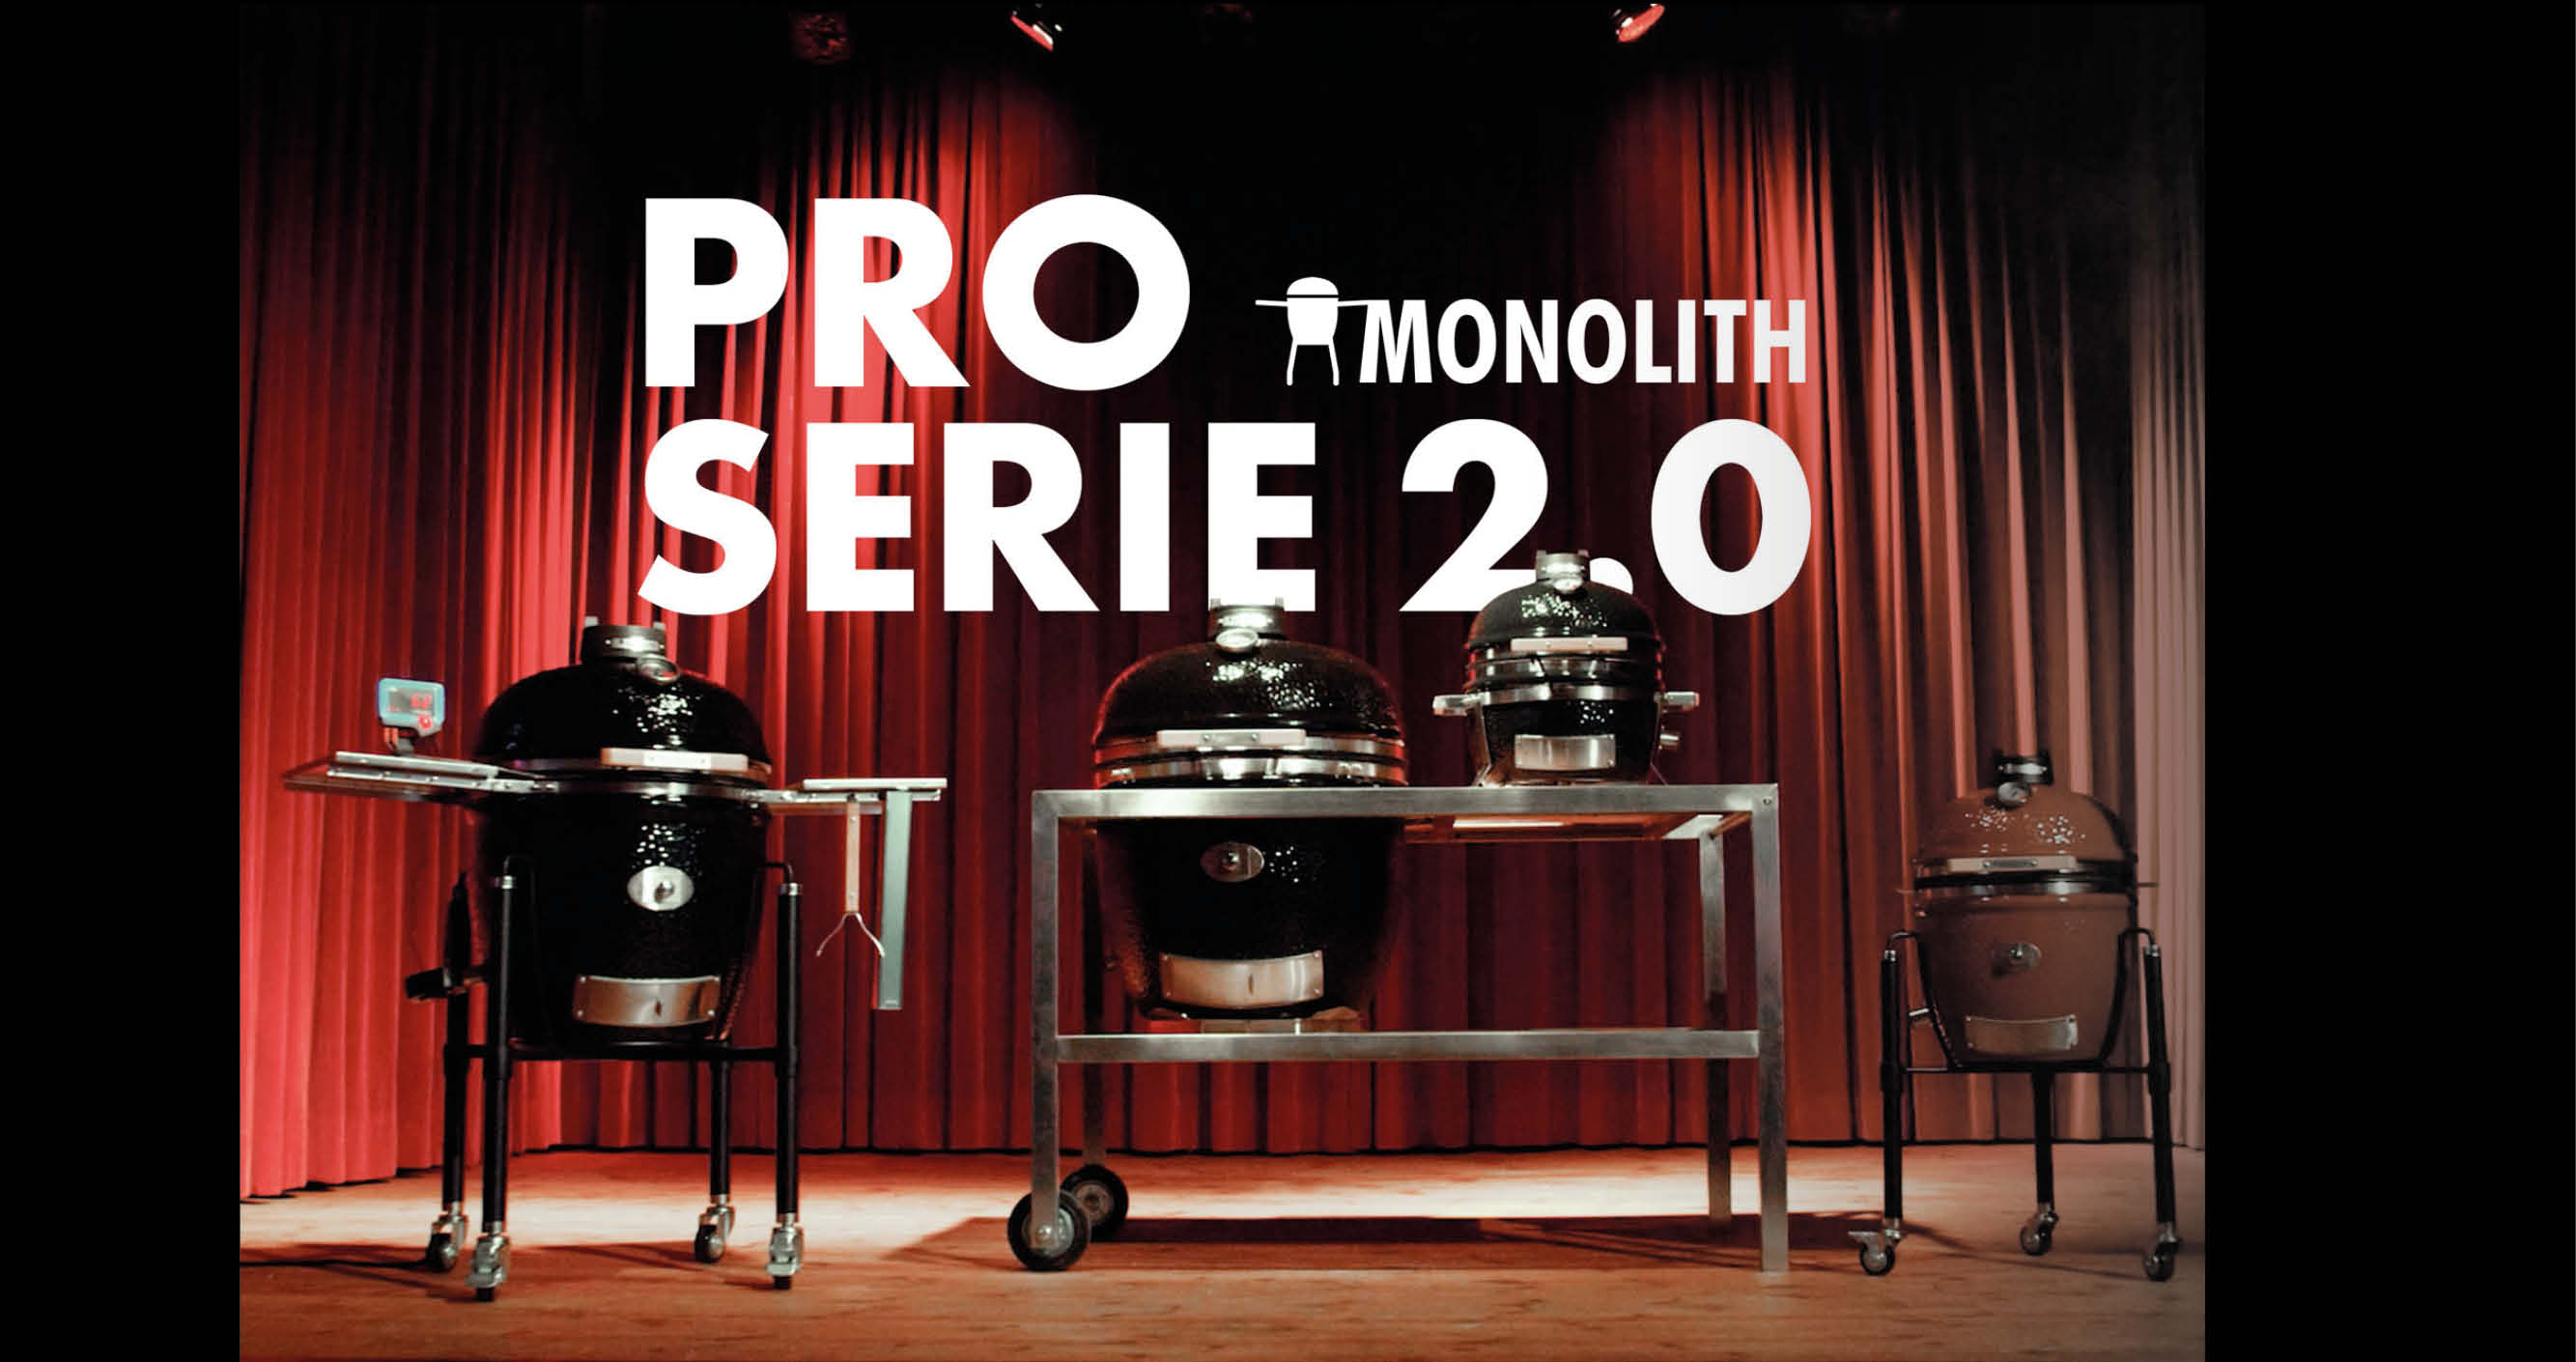 Monolith Pro Serie 2.0